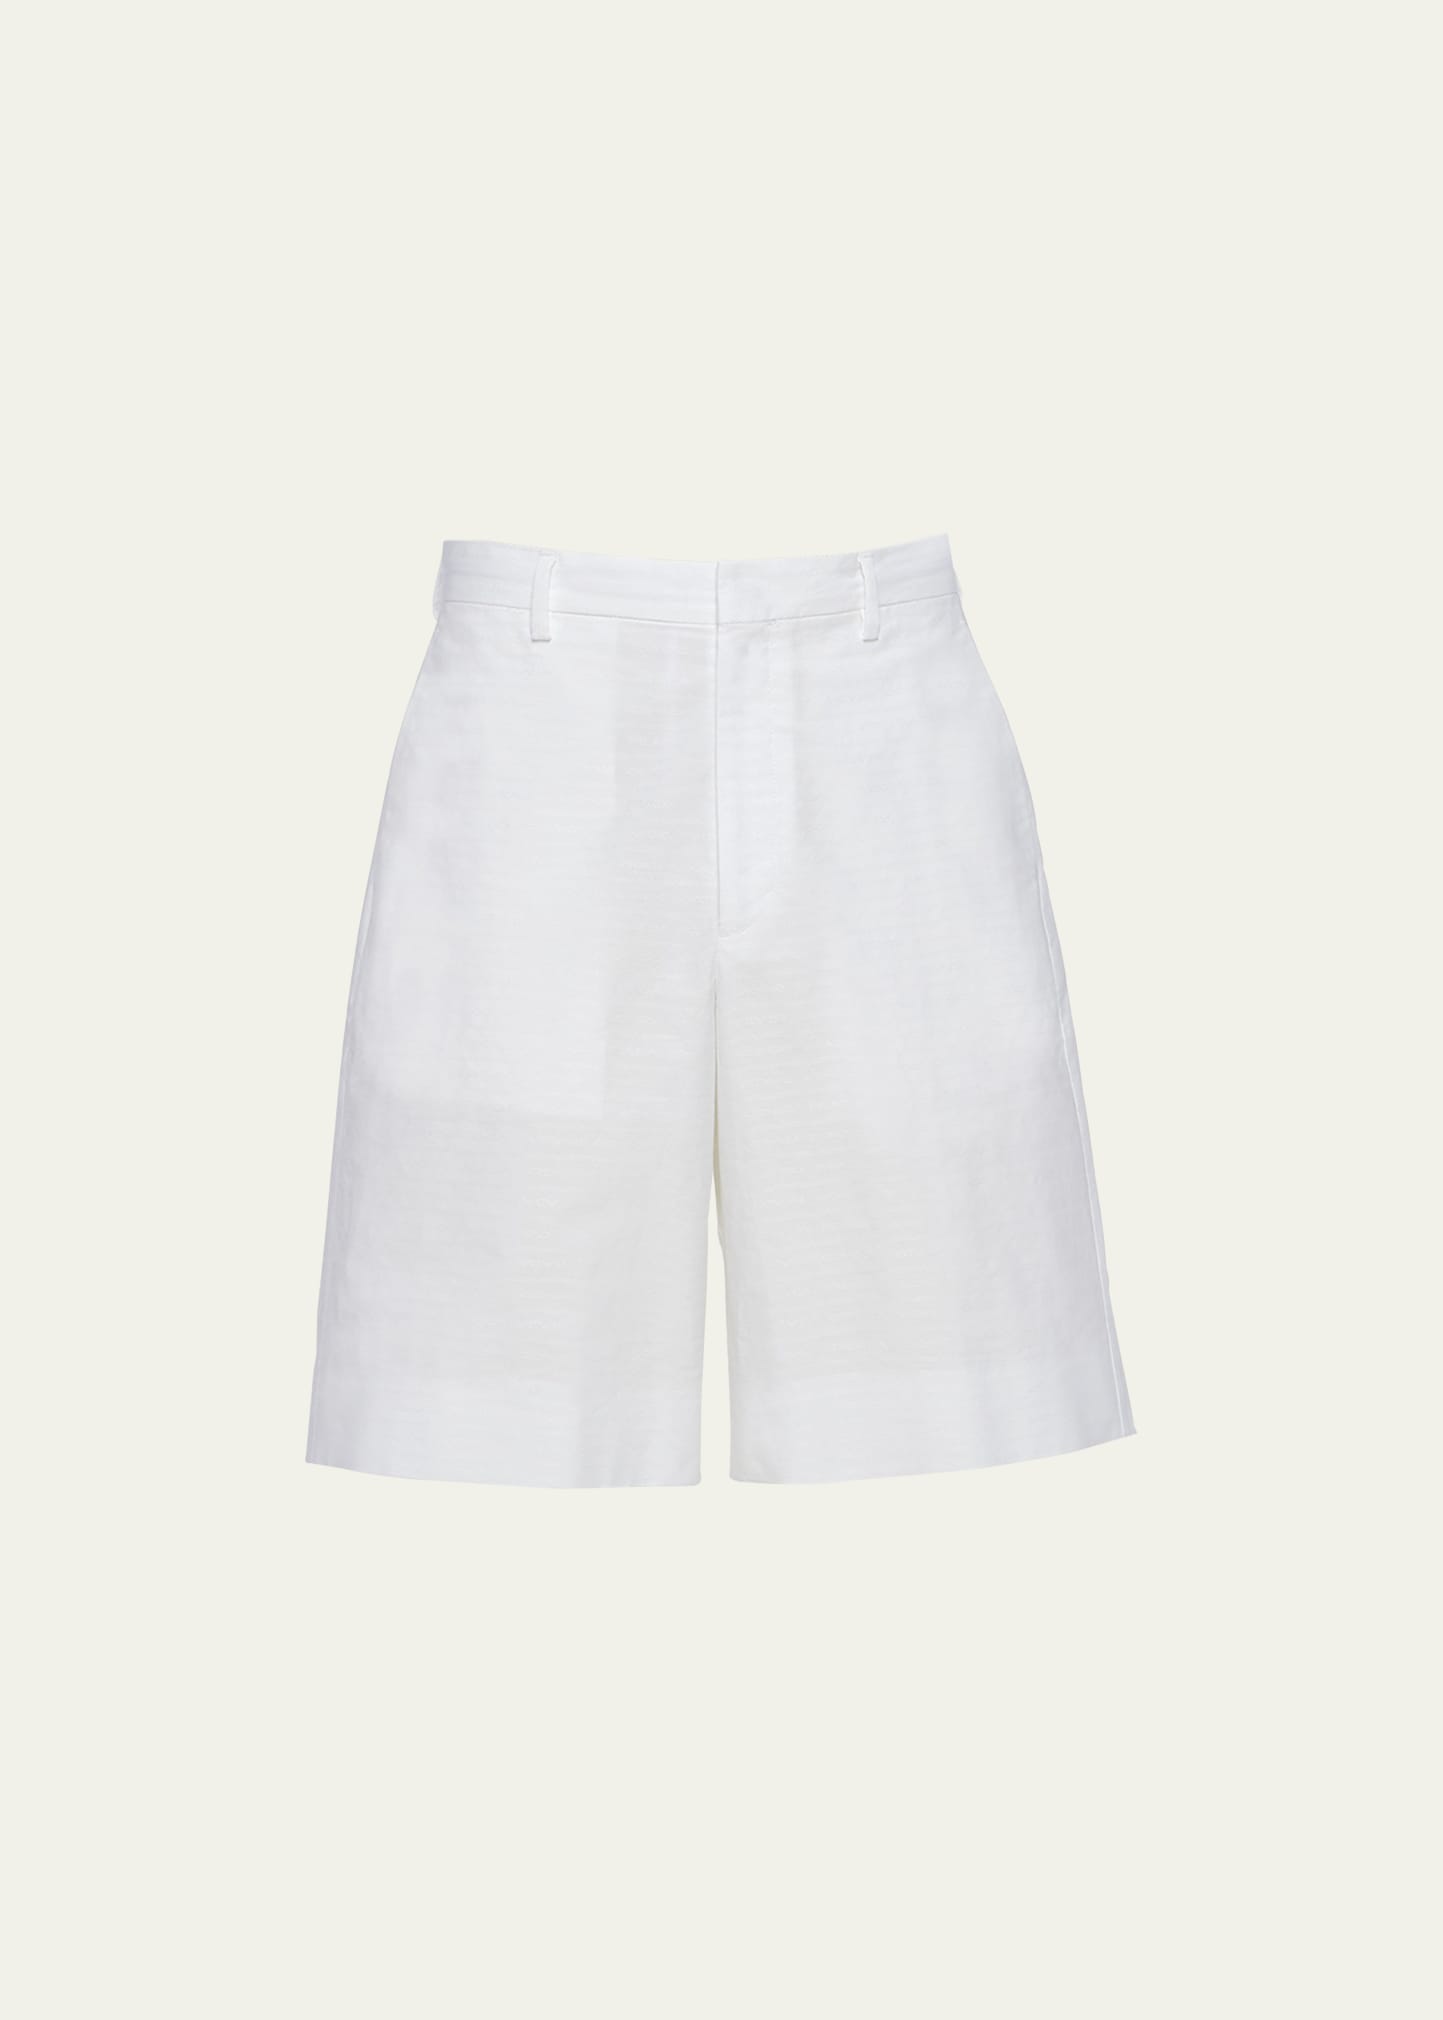 Men's Solid Cotton Poplin Shorts